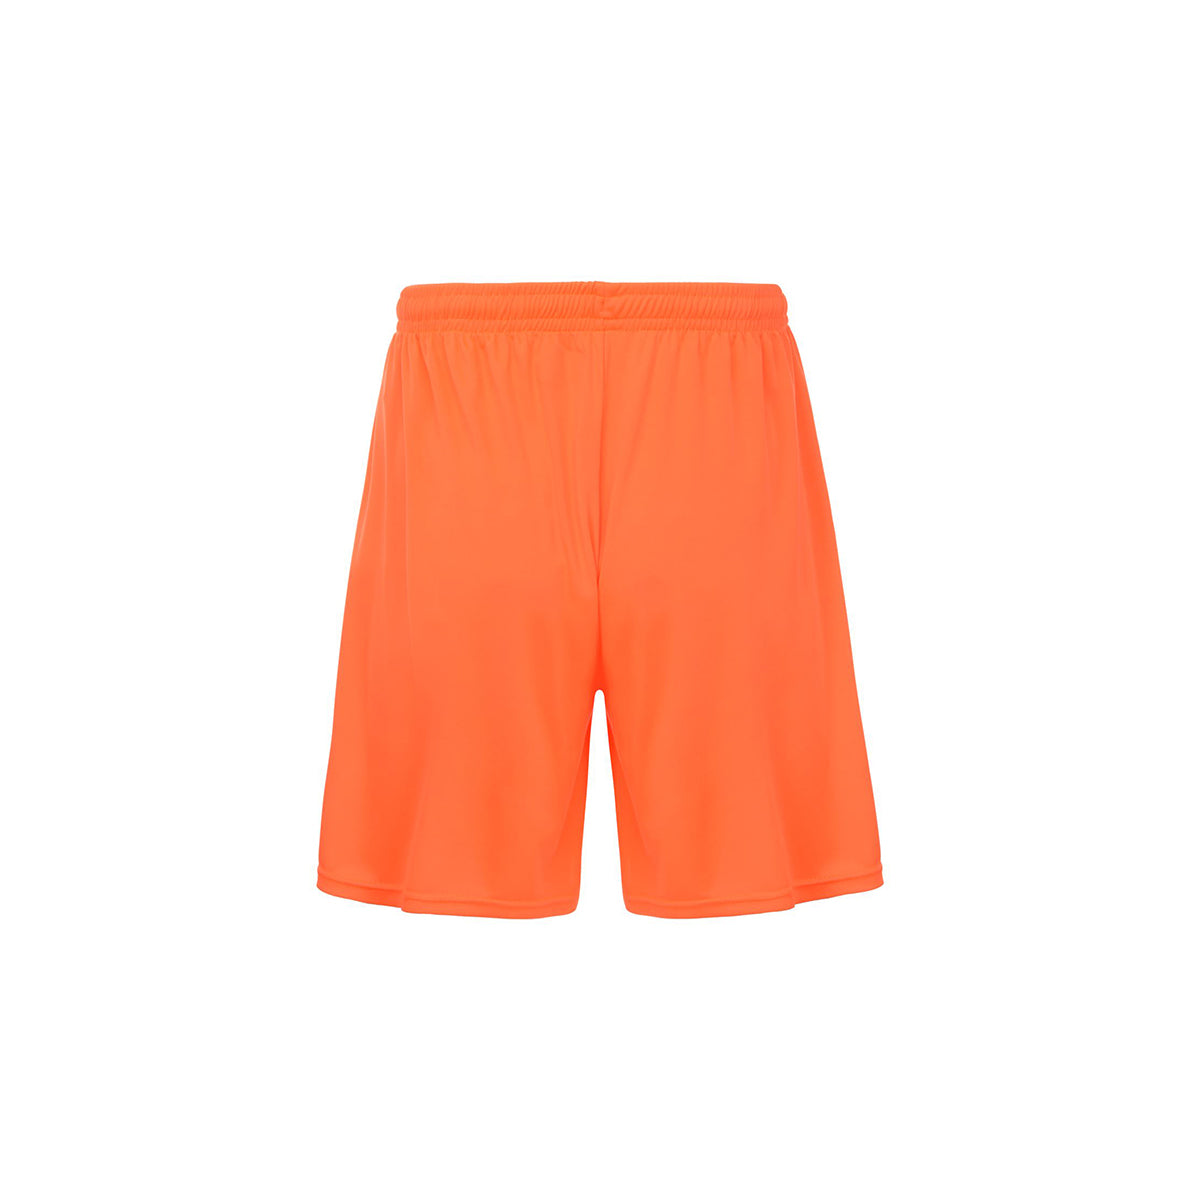 Pantalones cortes Borgo Naranja Niños - imagen 3